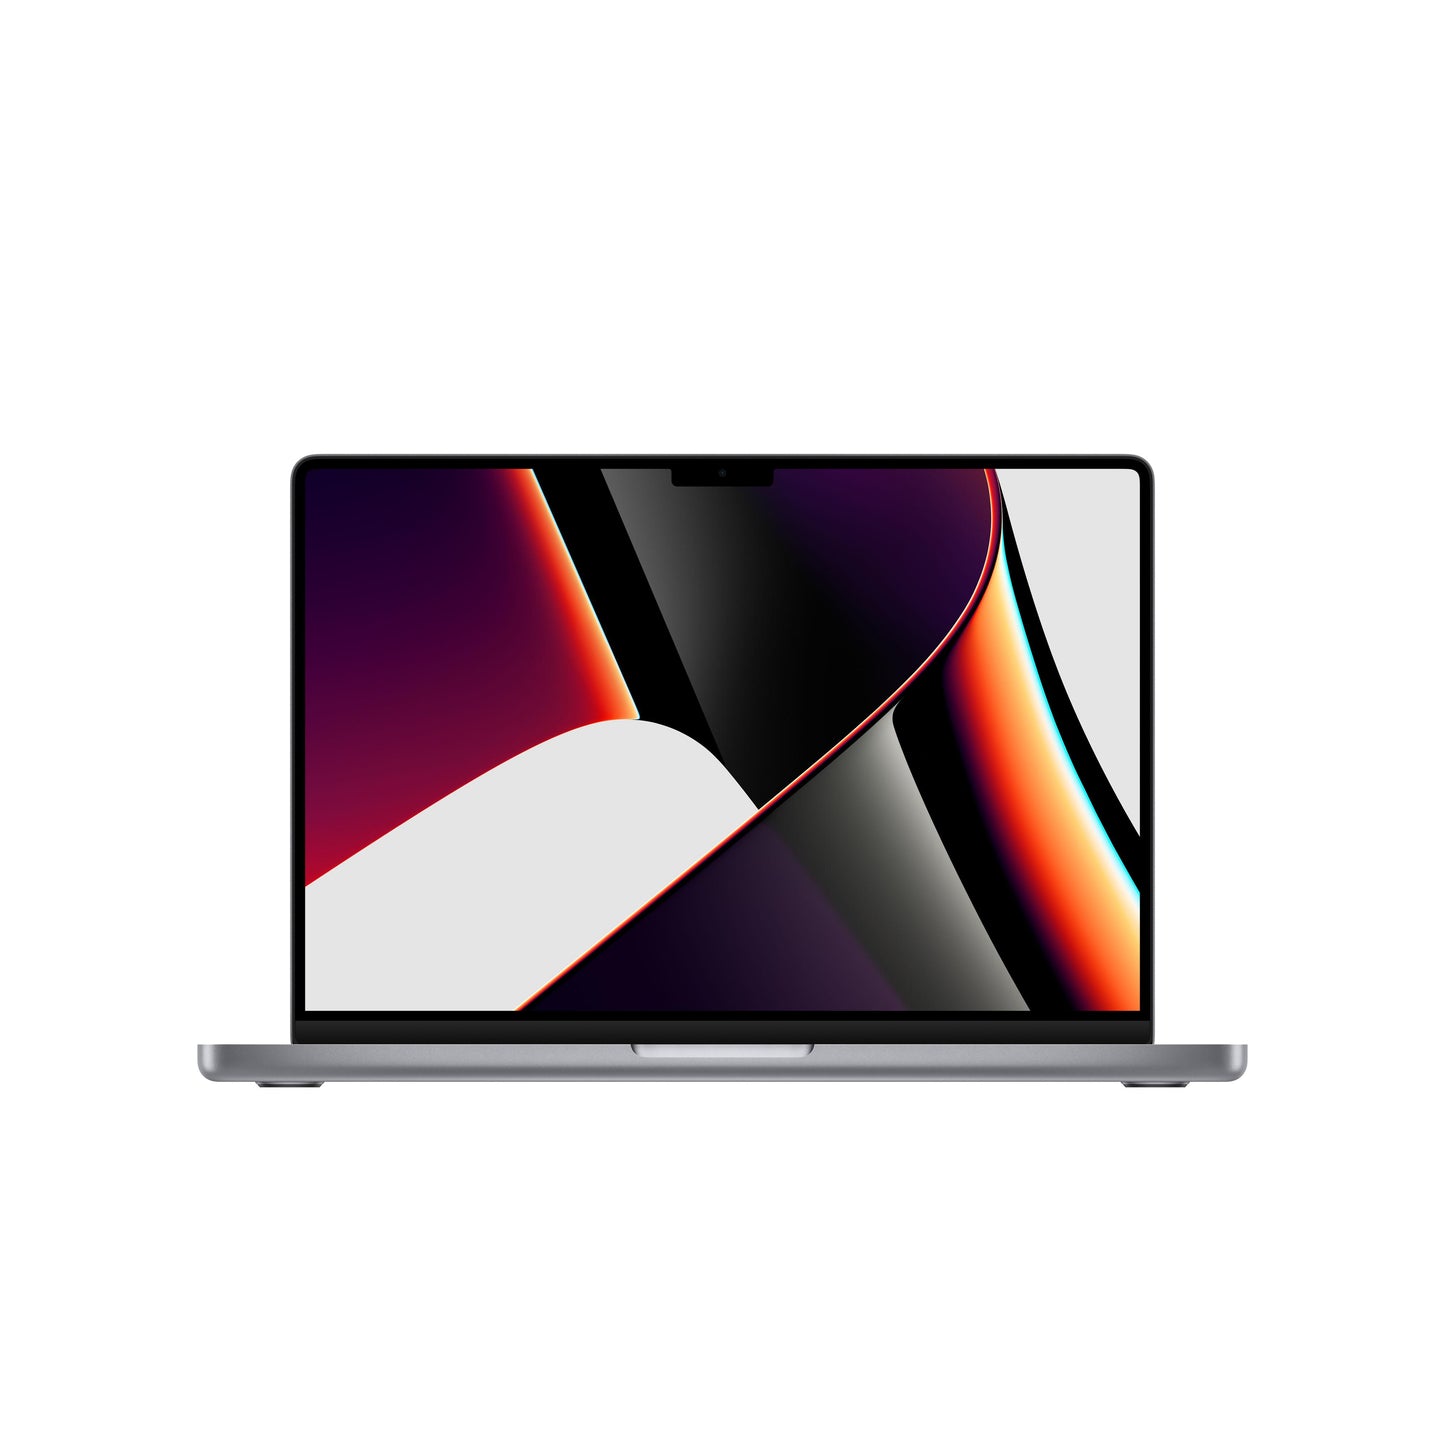 MacBook Pro مقاس 14 انش: شريحة Apple M1 Pro مع وحدة معالجة مركزية 10 نوى و 16 وحدة معالجة رسومات أساسية، 1 تيرابايت SSD - رمادي